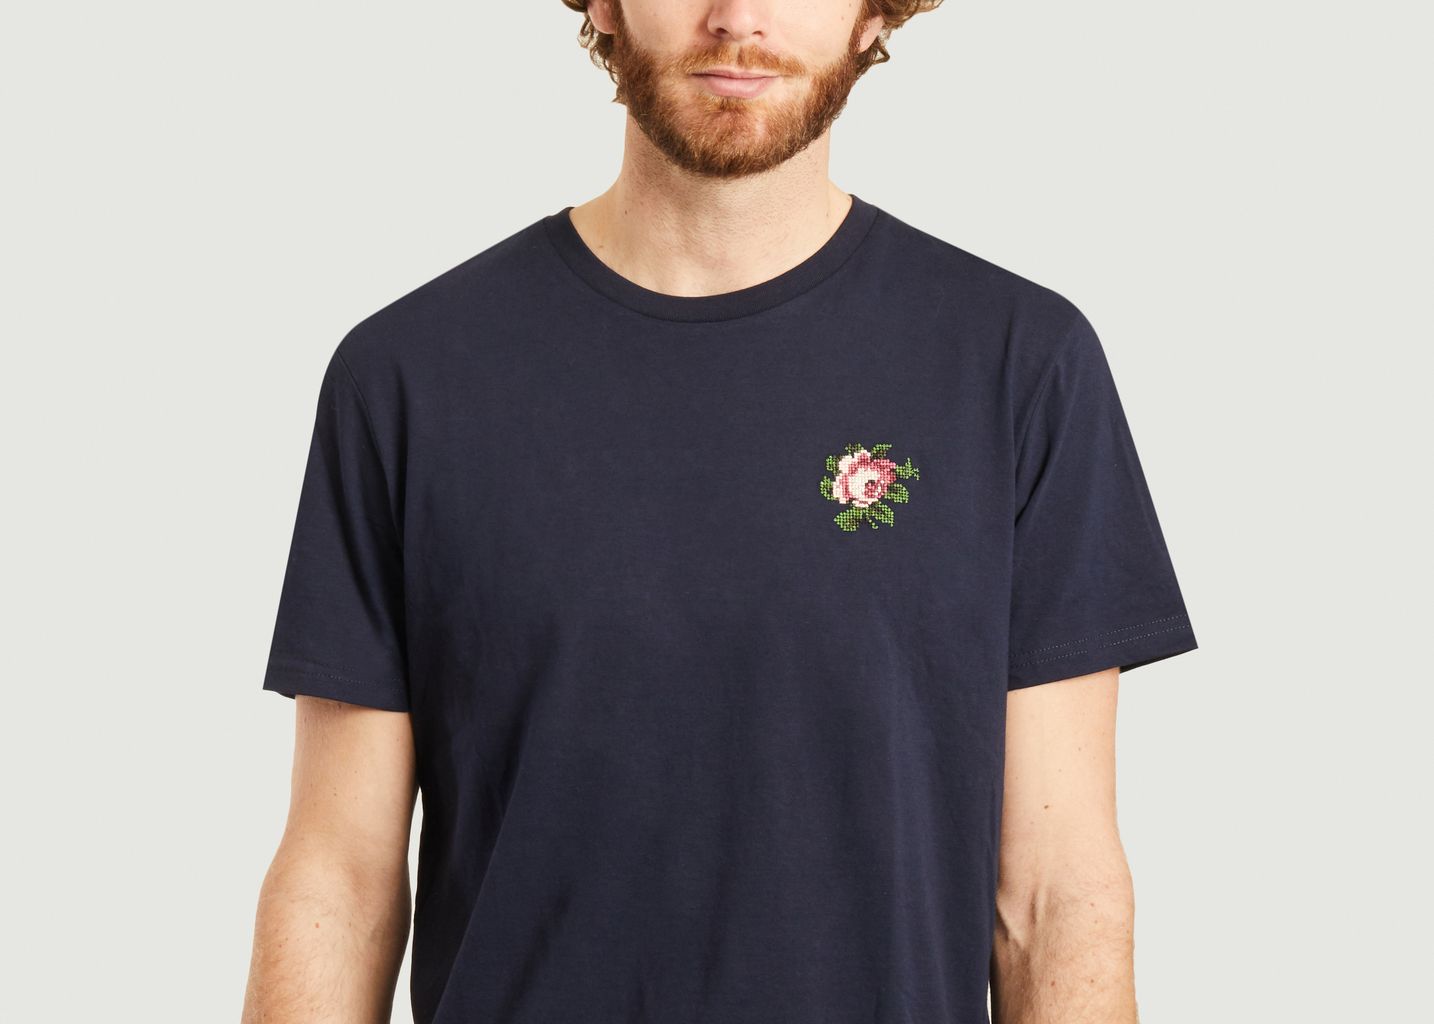 Rose T-shirt - Johnny Romance